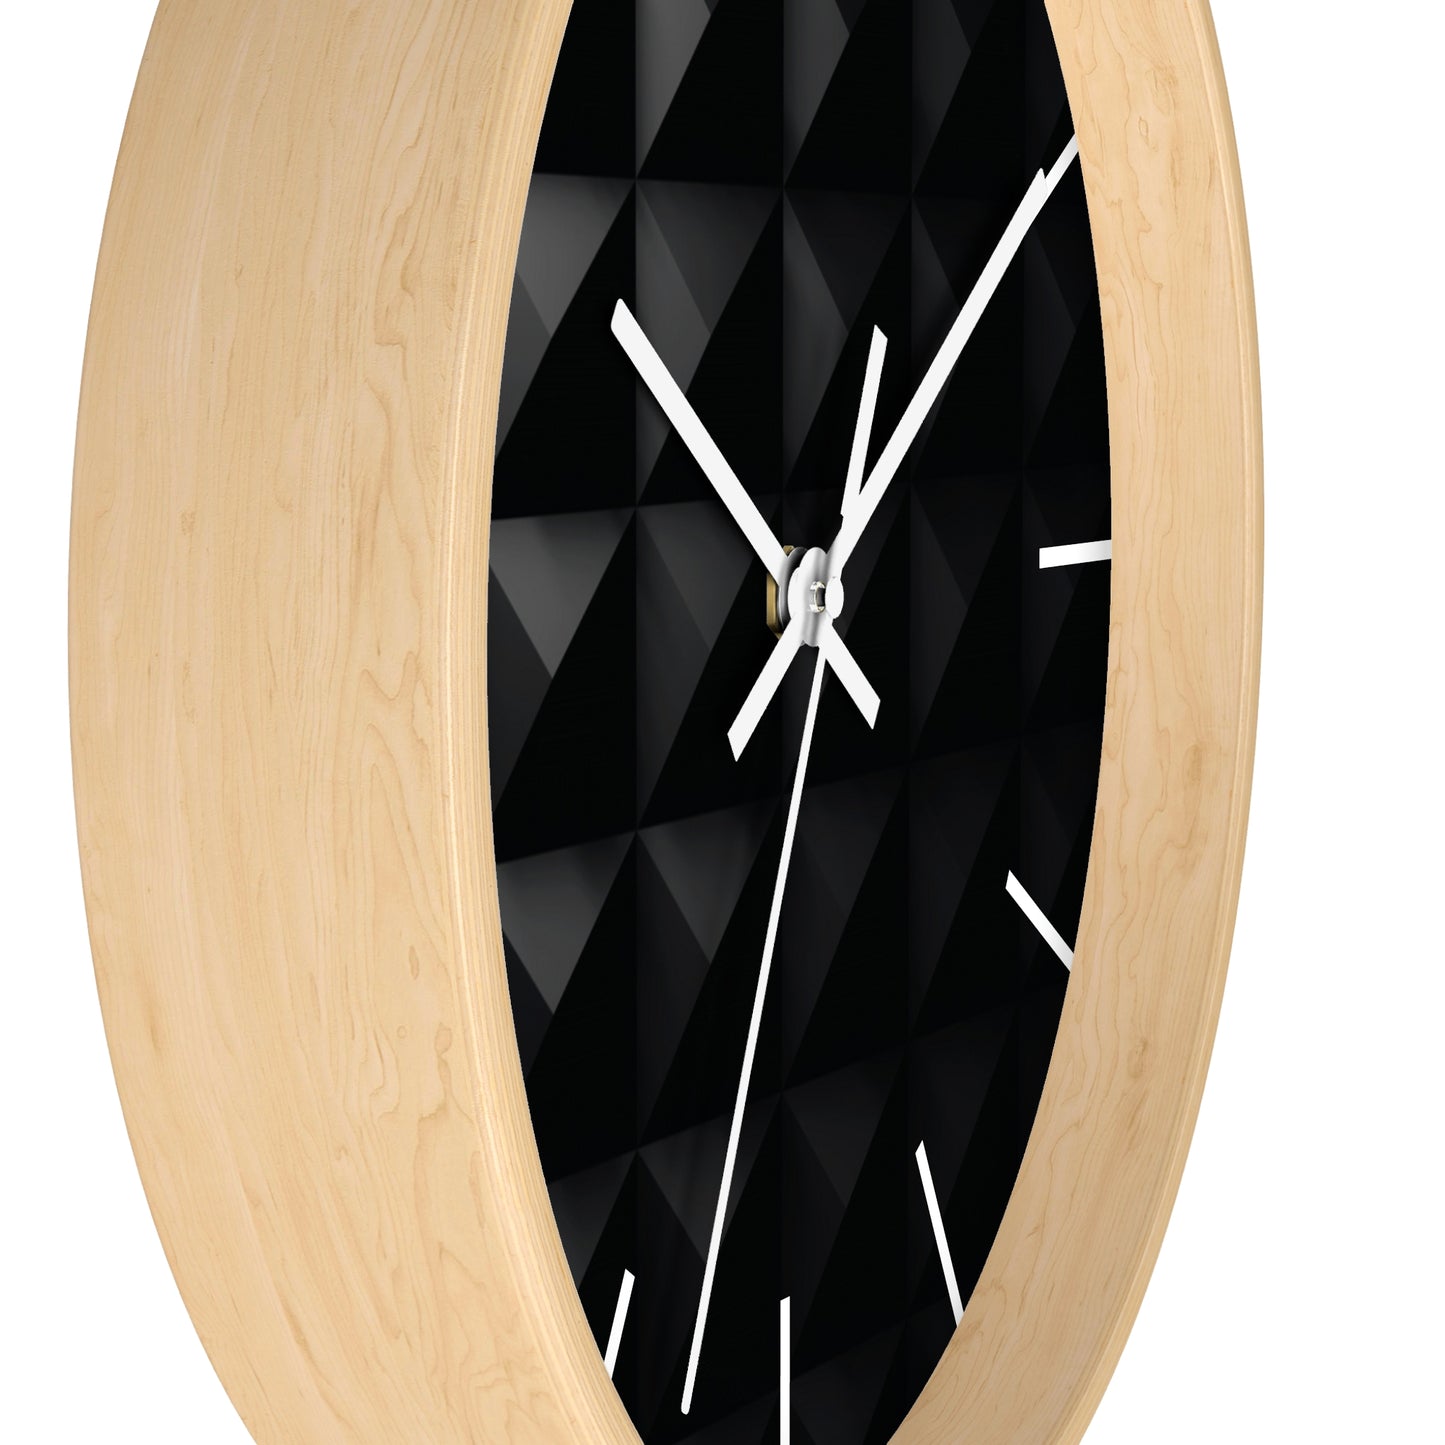 Black Studded Wall clock